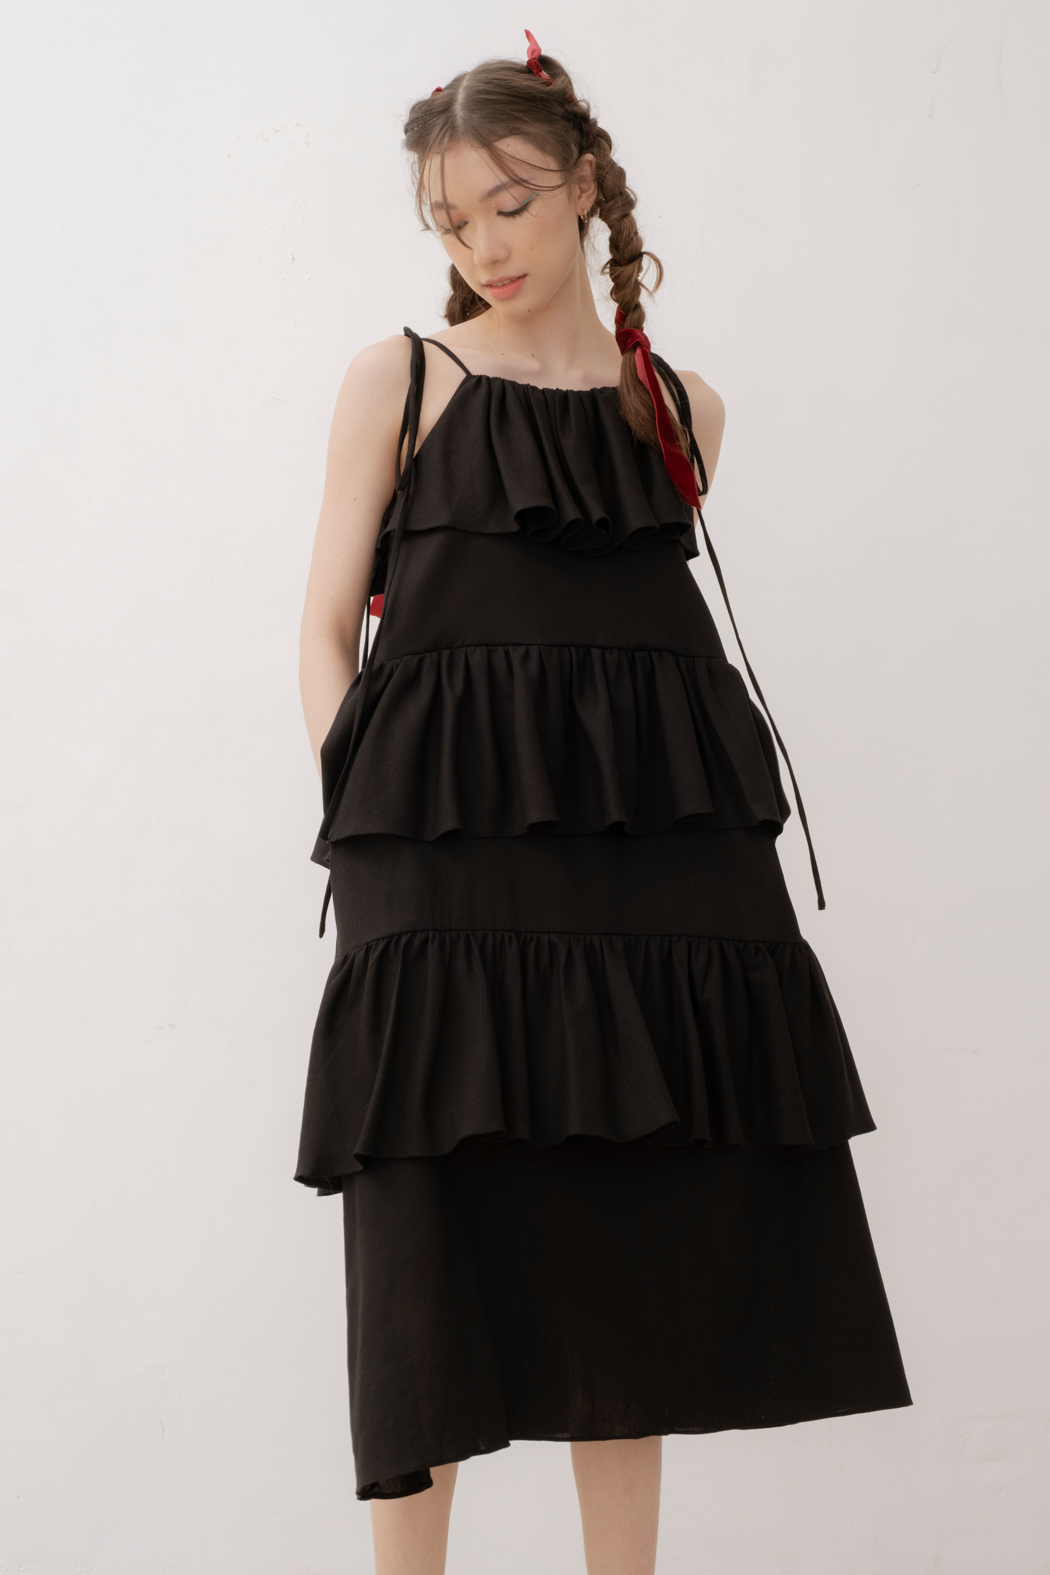 Laya Dress in Black (40% Off)